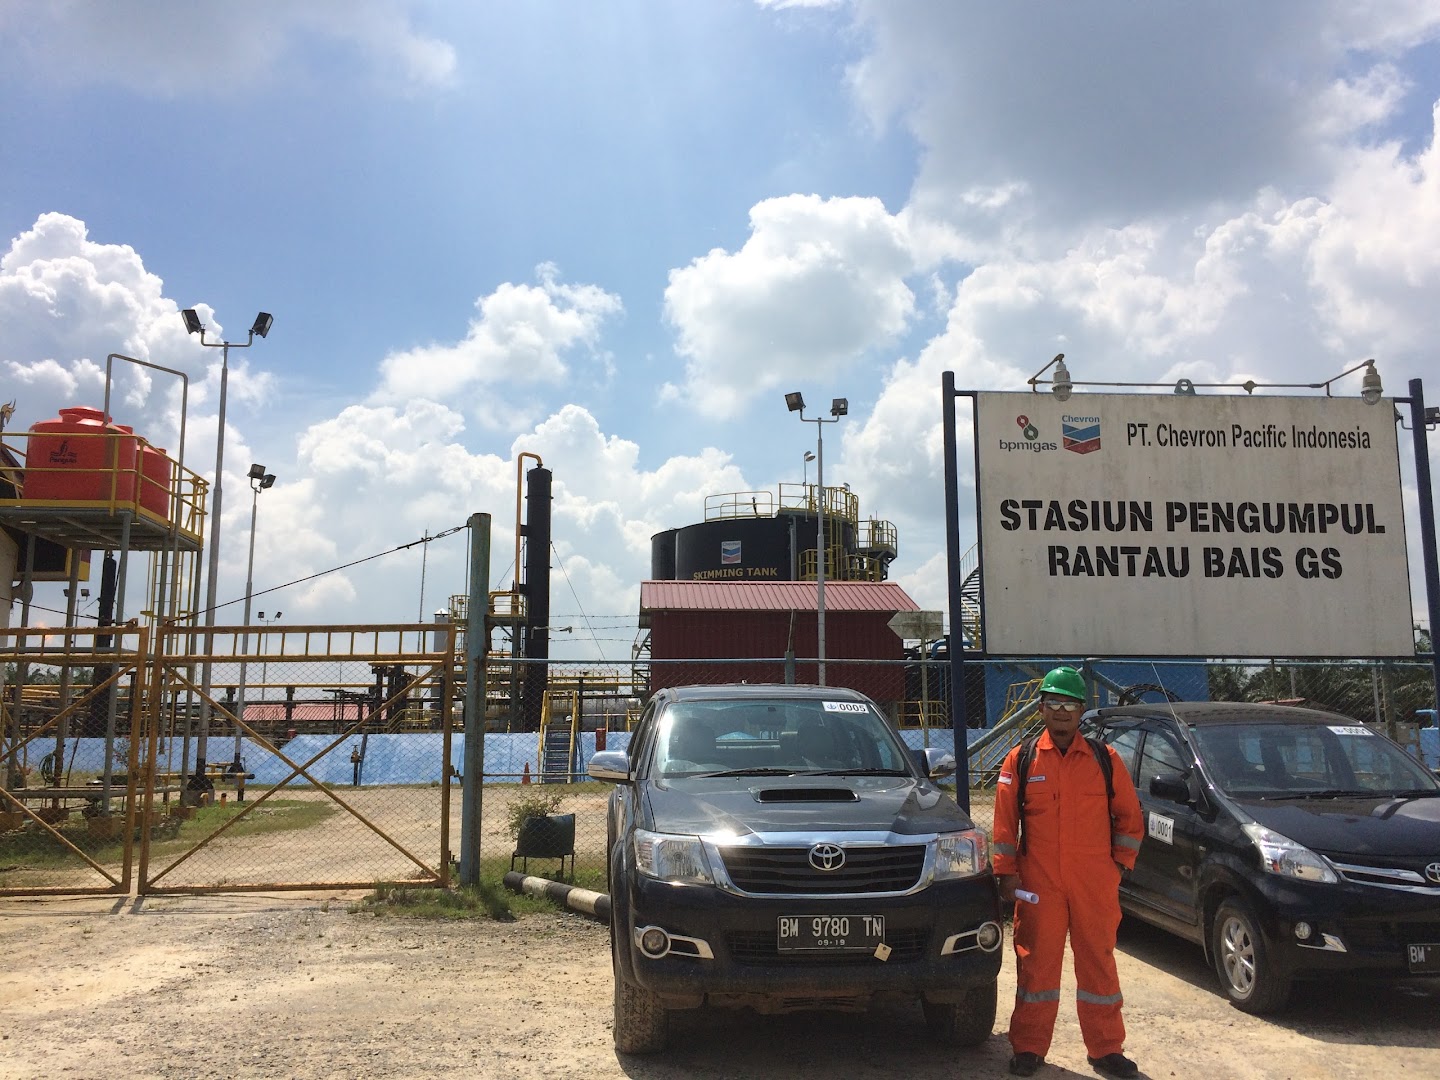 Pt. Chevron Pacific Indonesia, Stasiun Pengumpul Rantau Bais Gs Photo